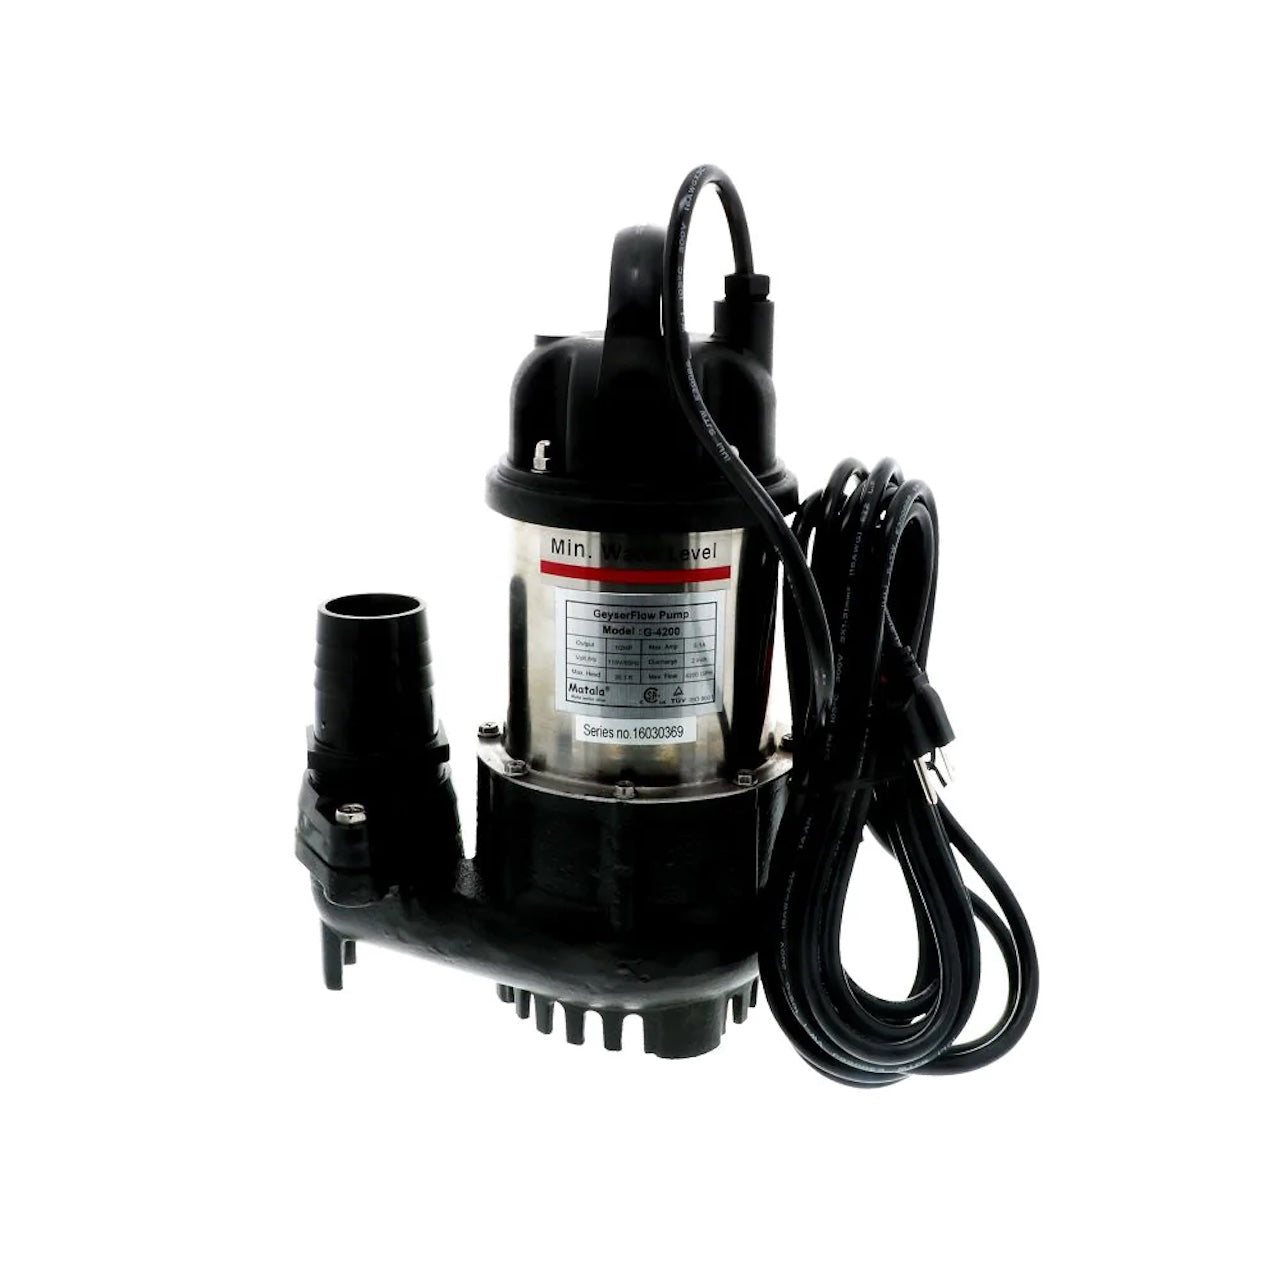 Matala GeyserFlow G-4200 1/2 hp water pump